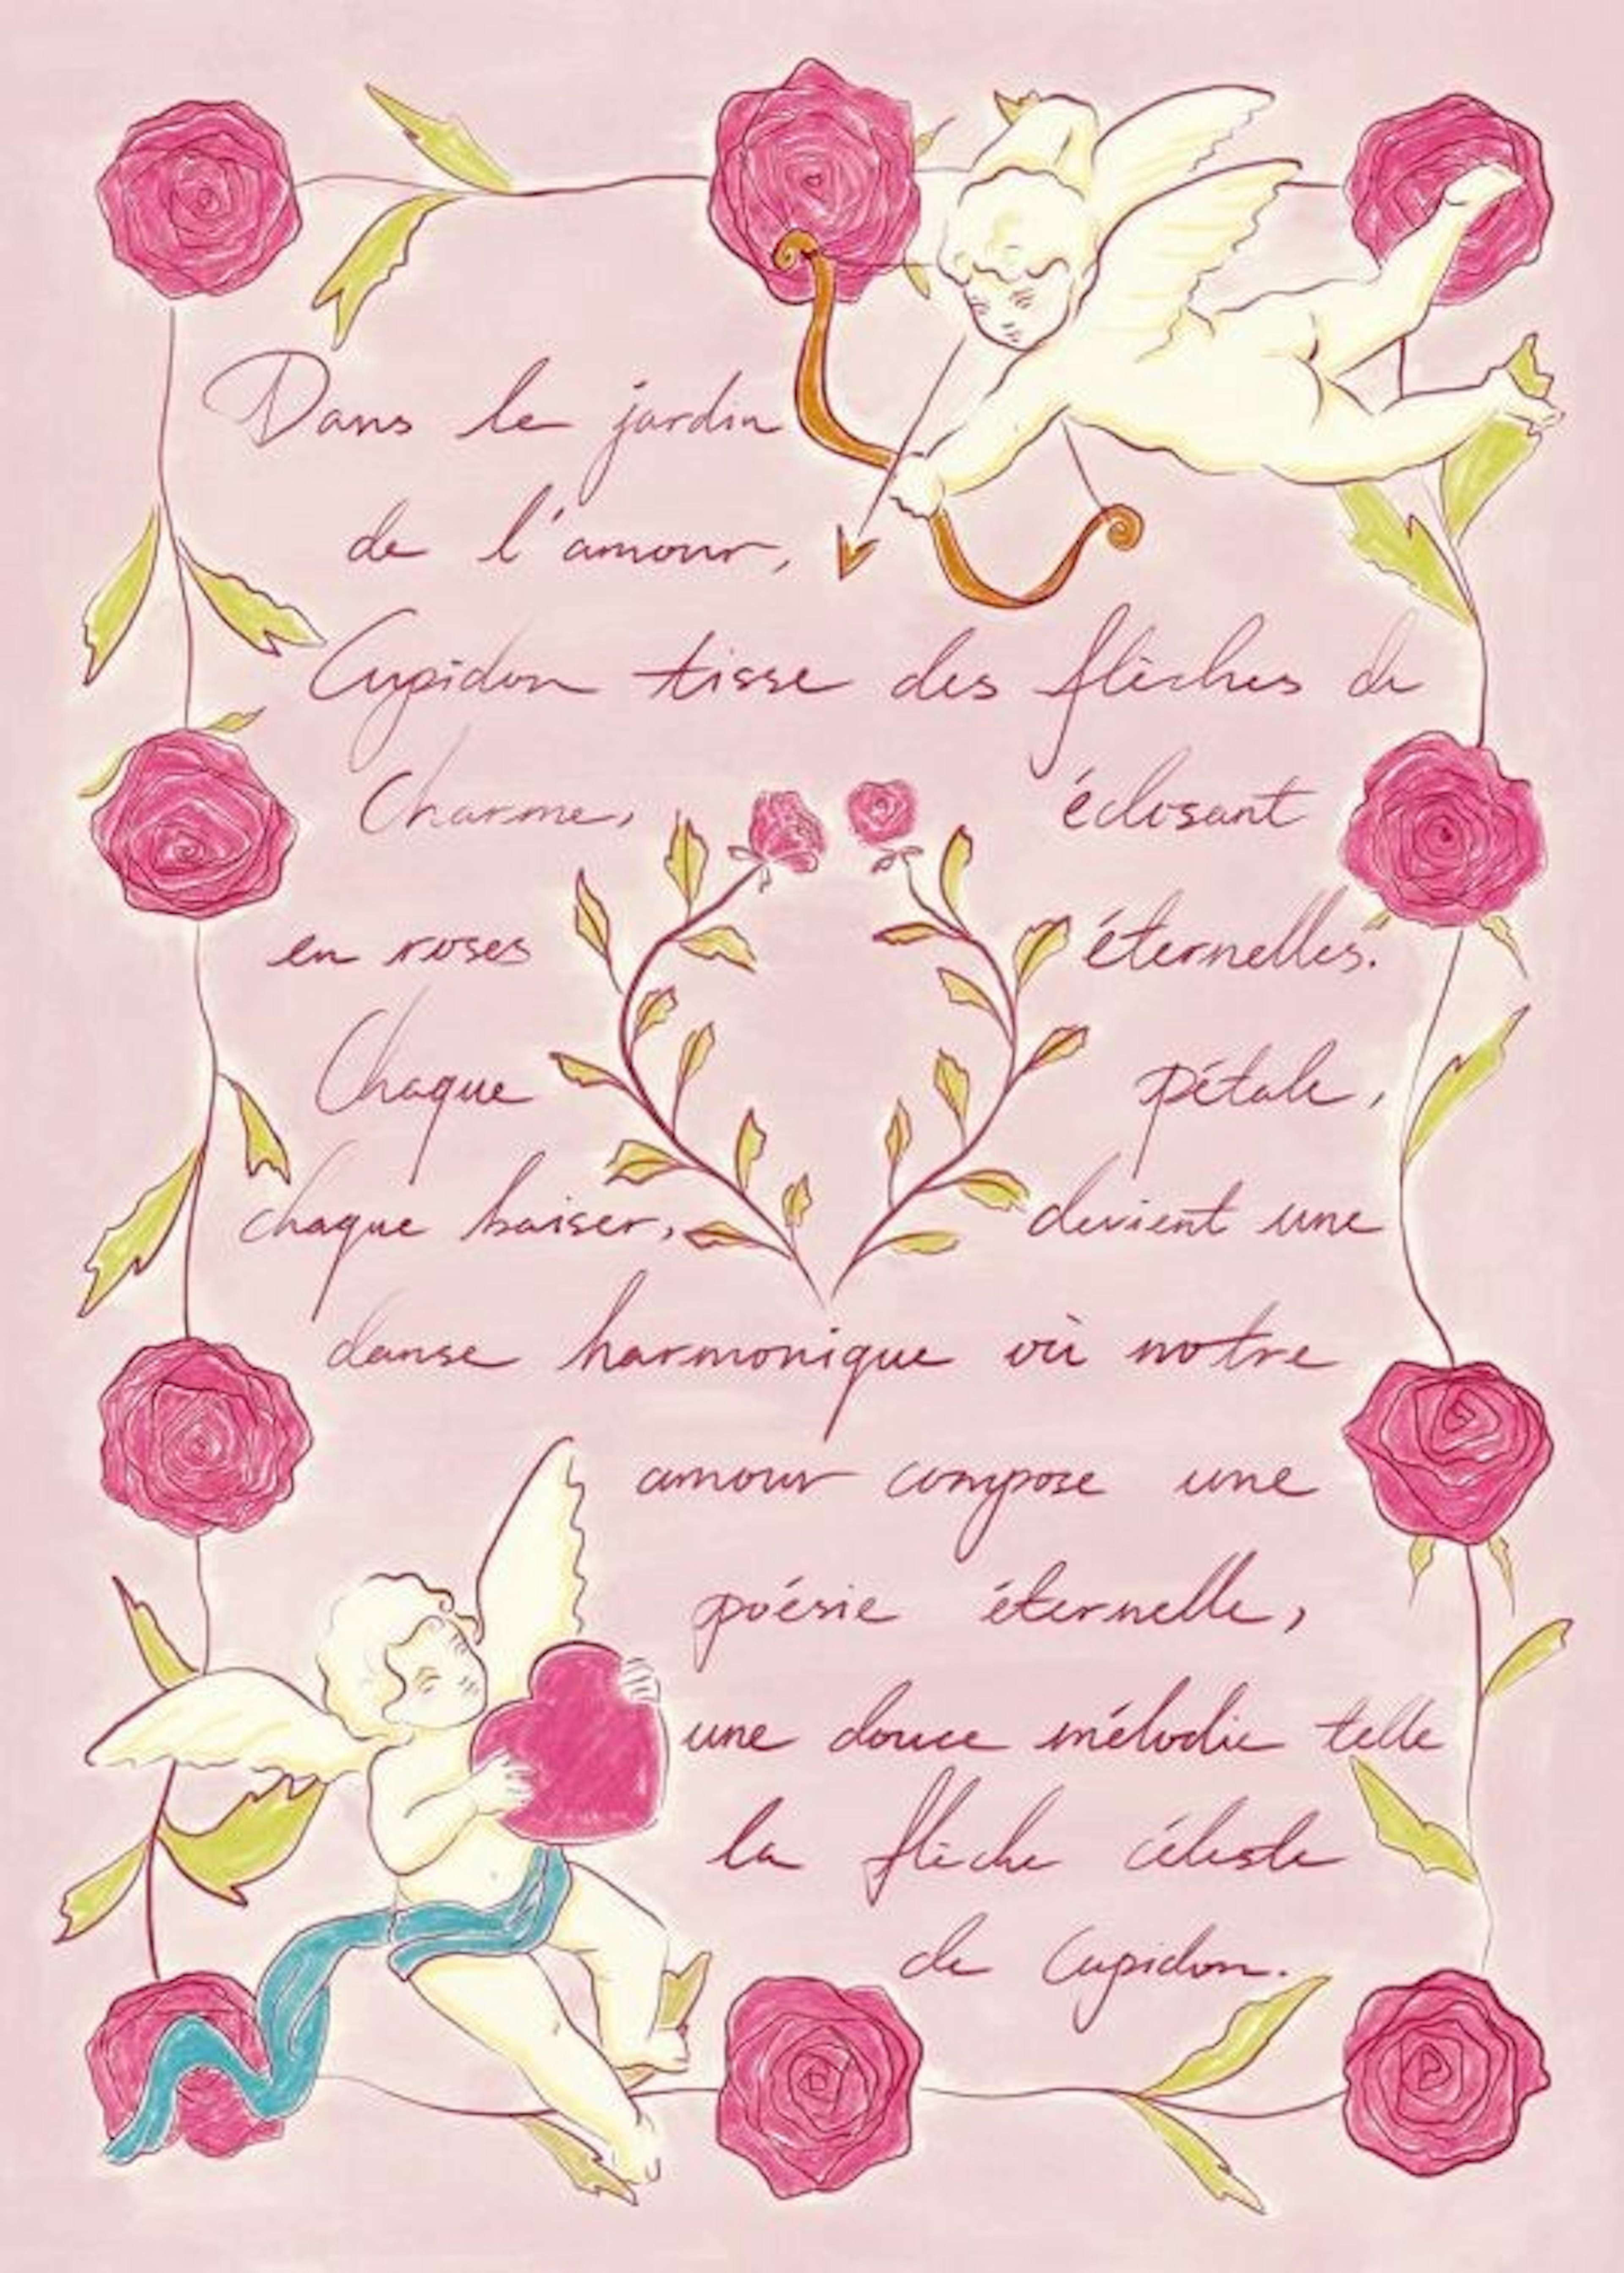 Cupid’s Love Letter Plakat 0